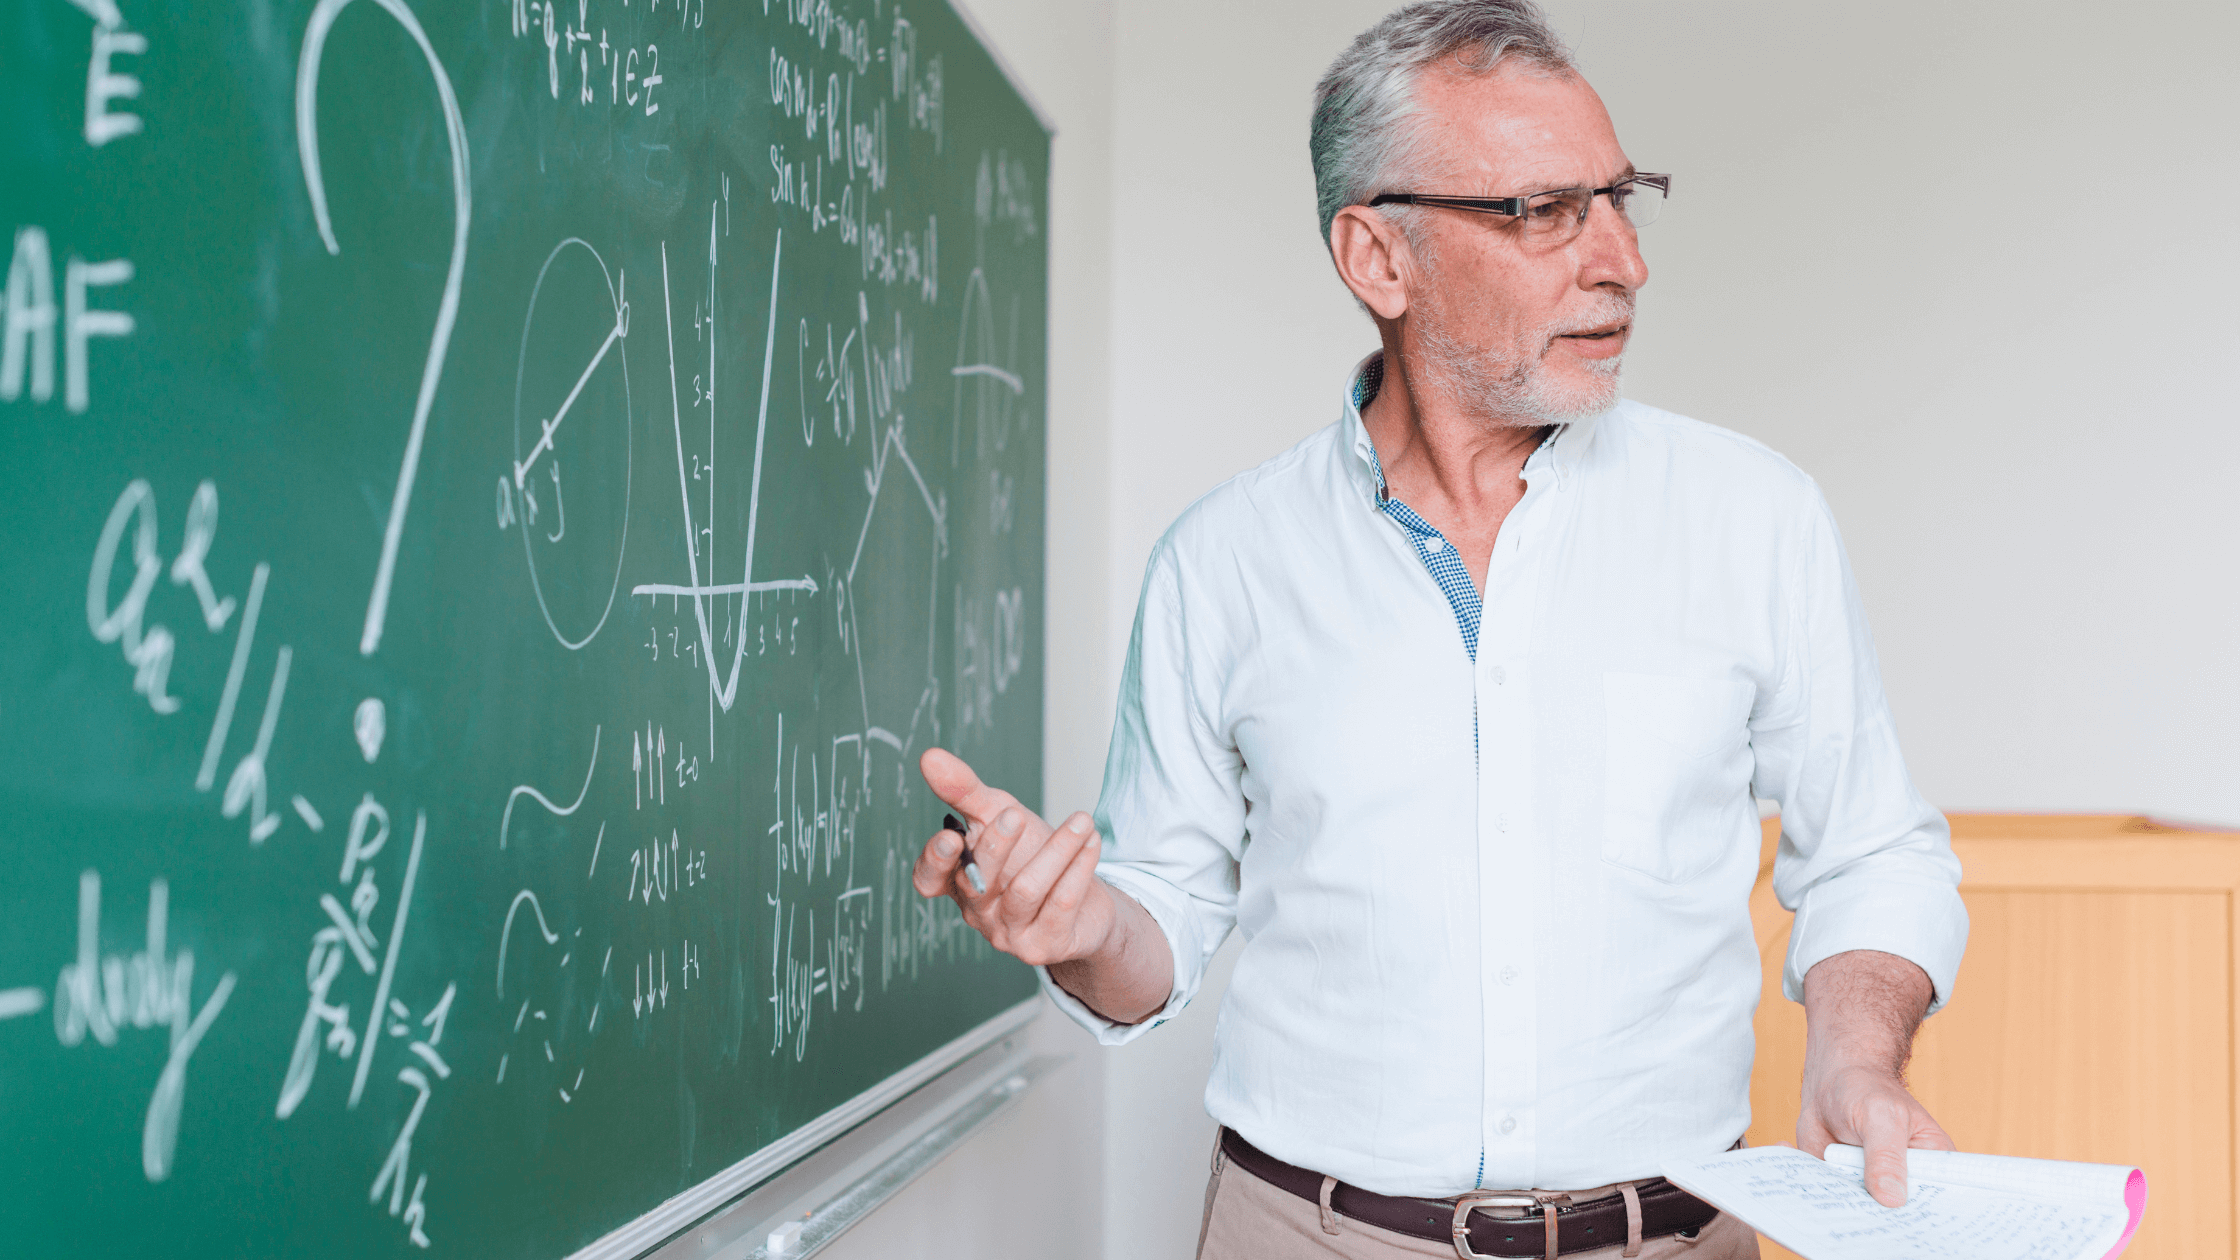 Teacher in front of blackboard with mathematical formulas written on it.